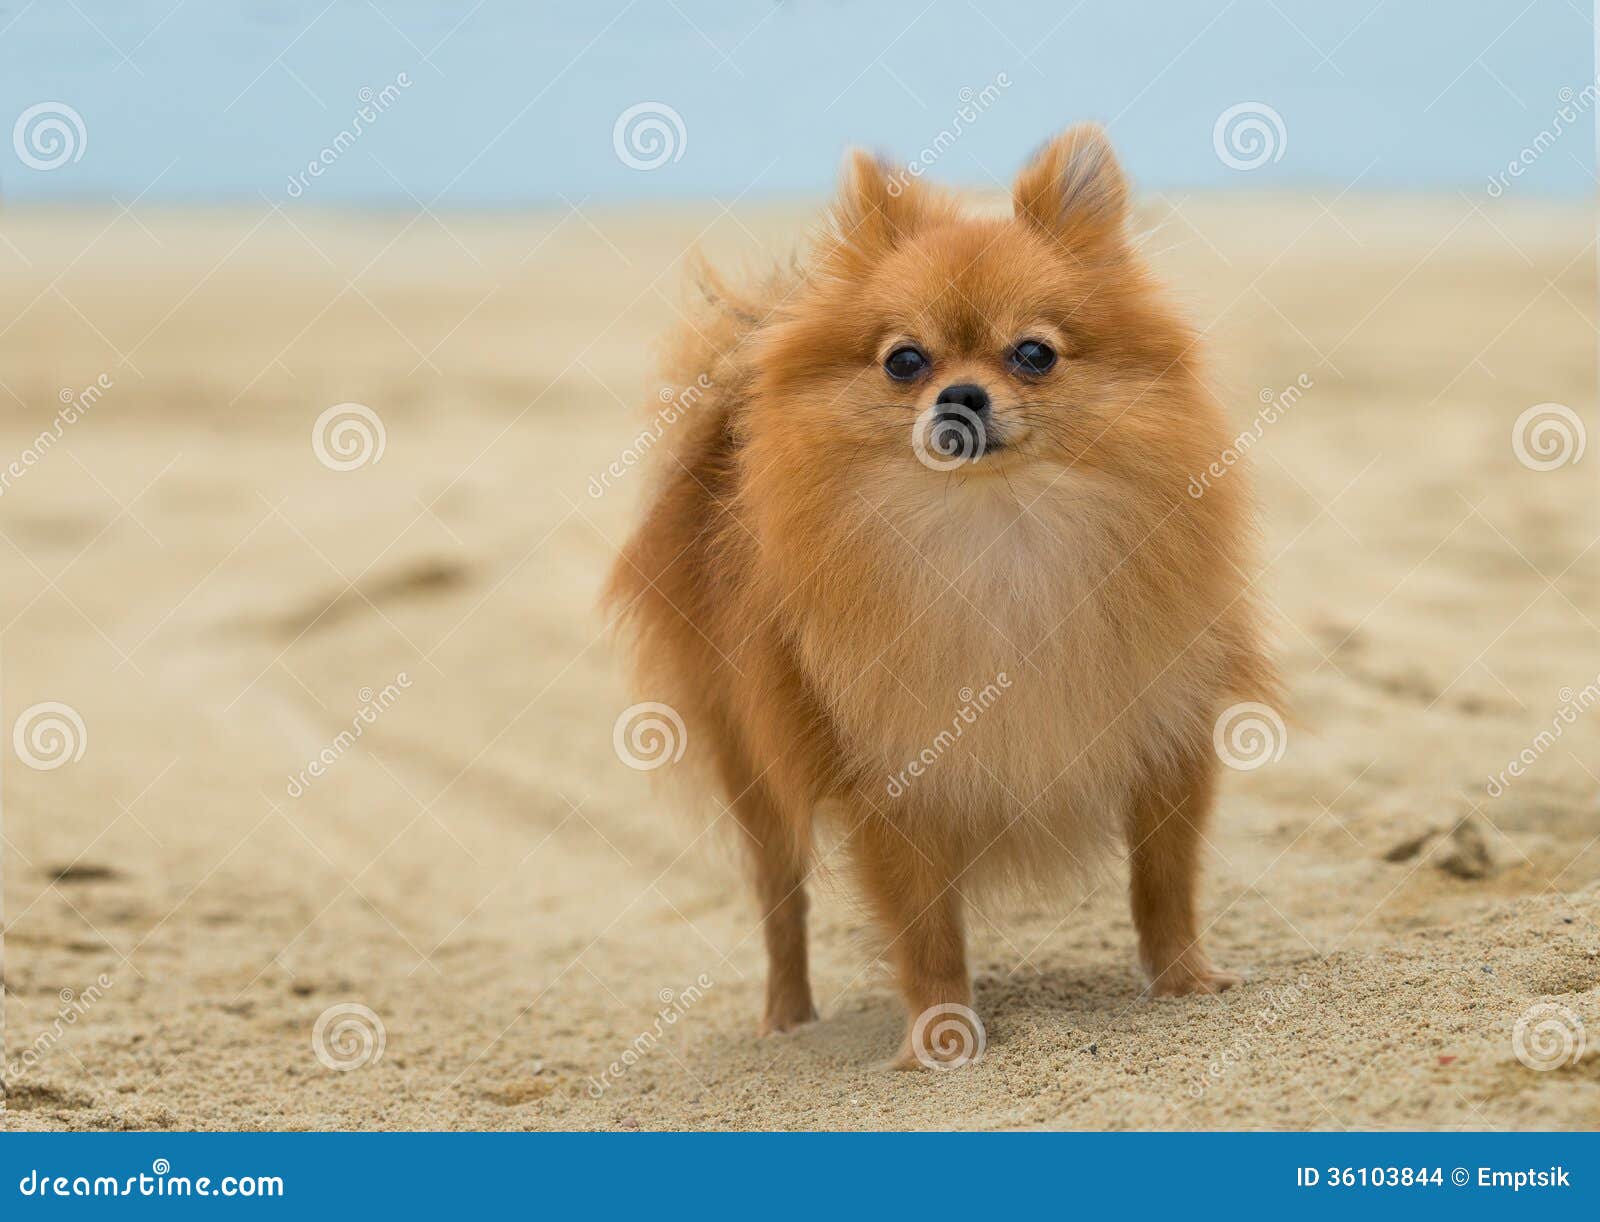 a beautiful female pomeranian dog